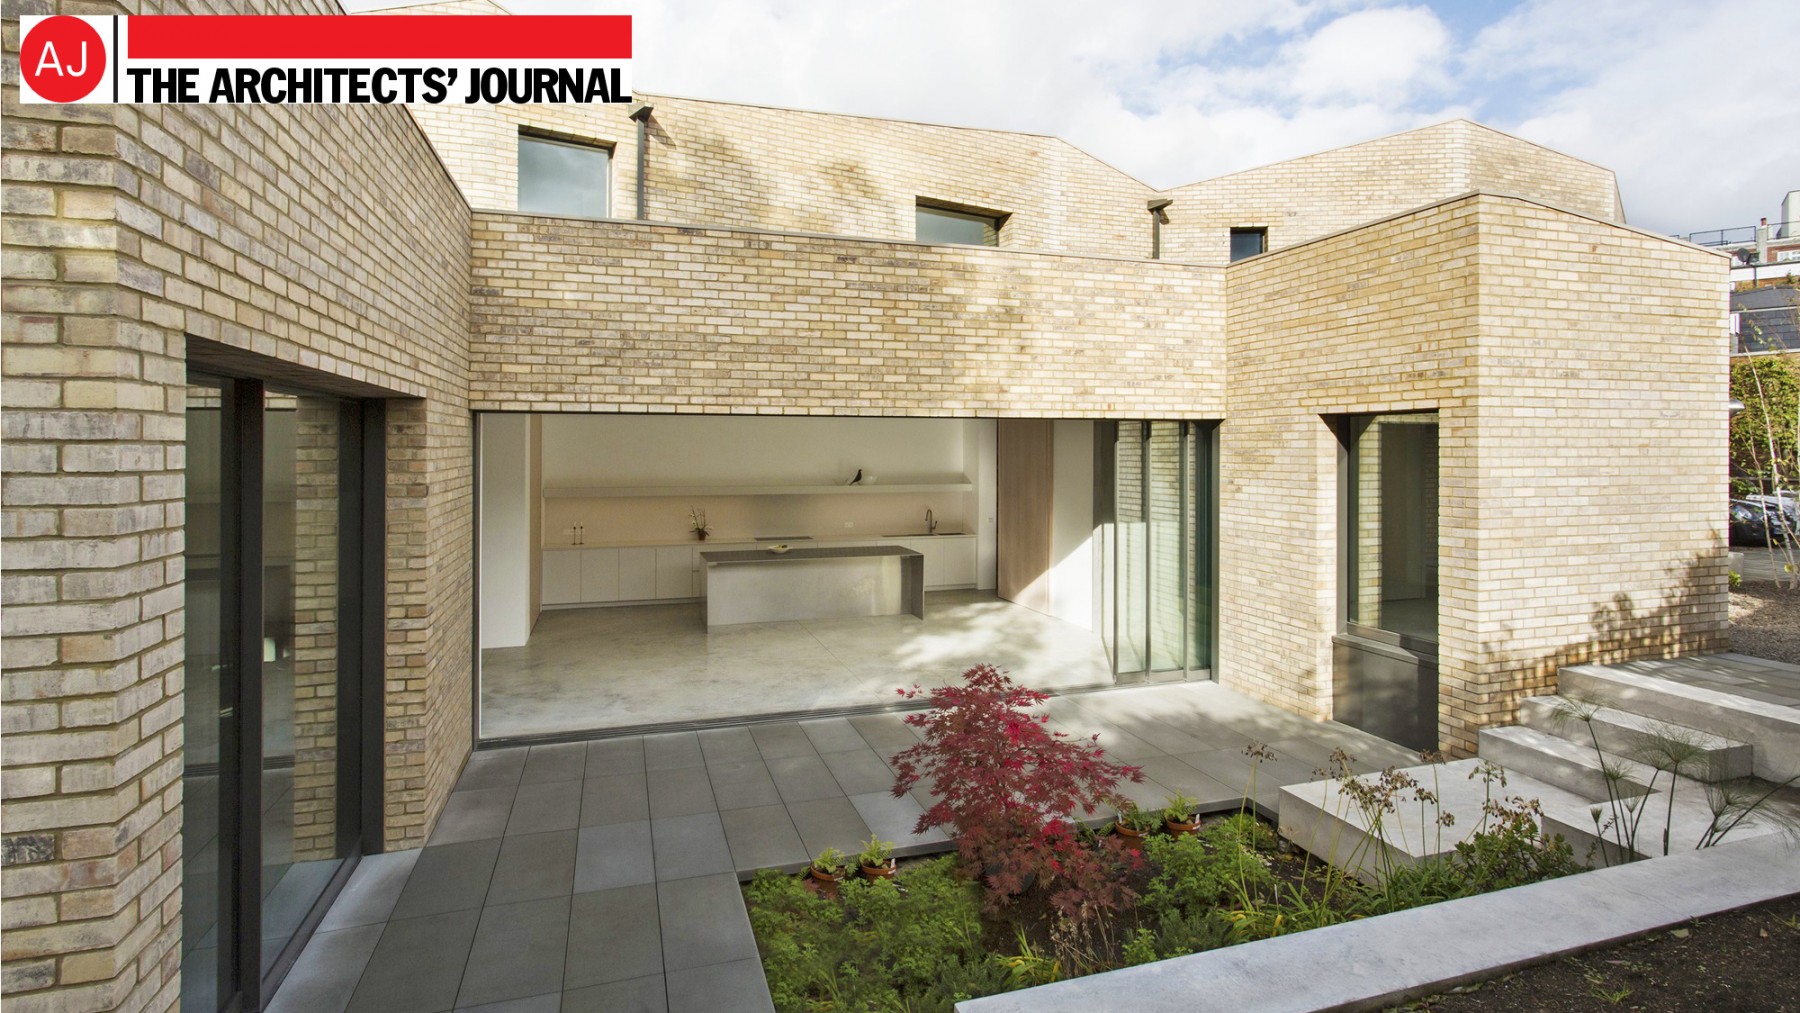 Luker-House-contemporary-modern-London-house-Barnes-Jamie-Fobert-Architects-RIBA-Award-Manser-Medal-Shortlist-AJ-Architects-Journal